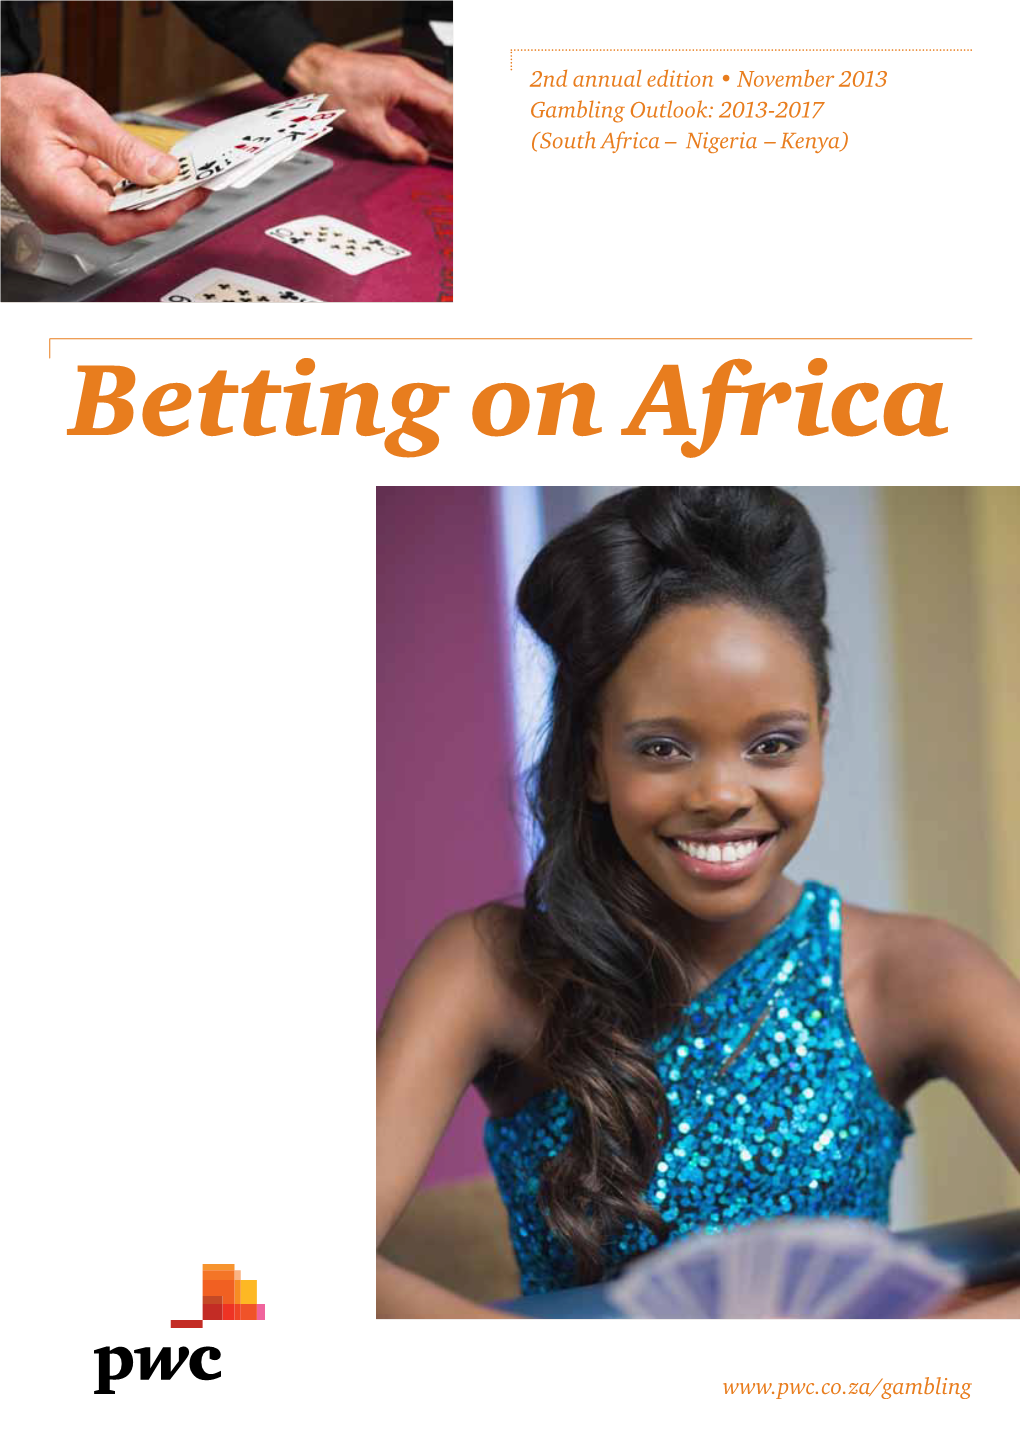 Gambling Outlook: 2013-2017 (South Africa – Nigeria – Kenya)